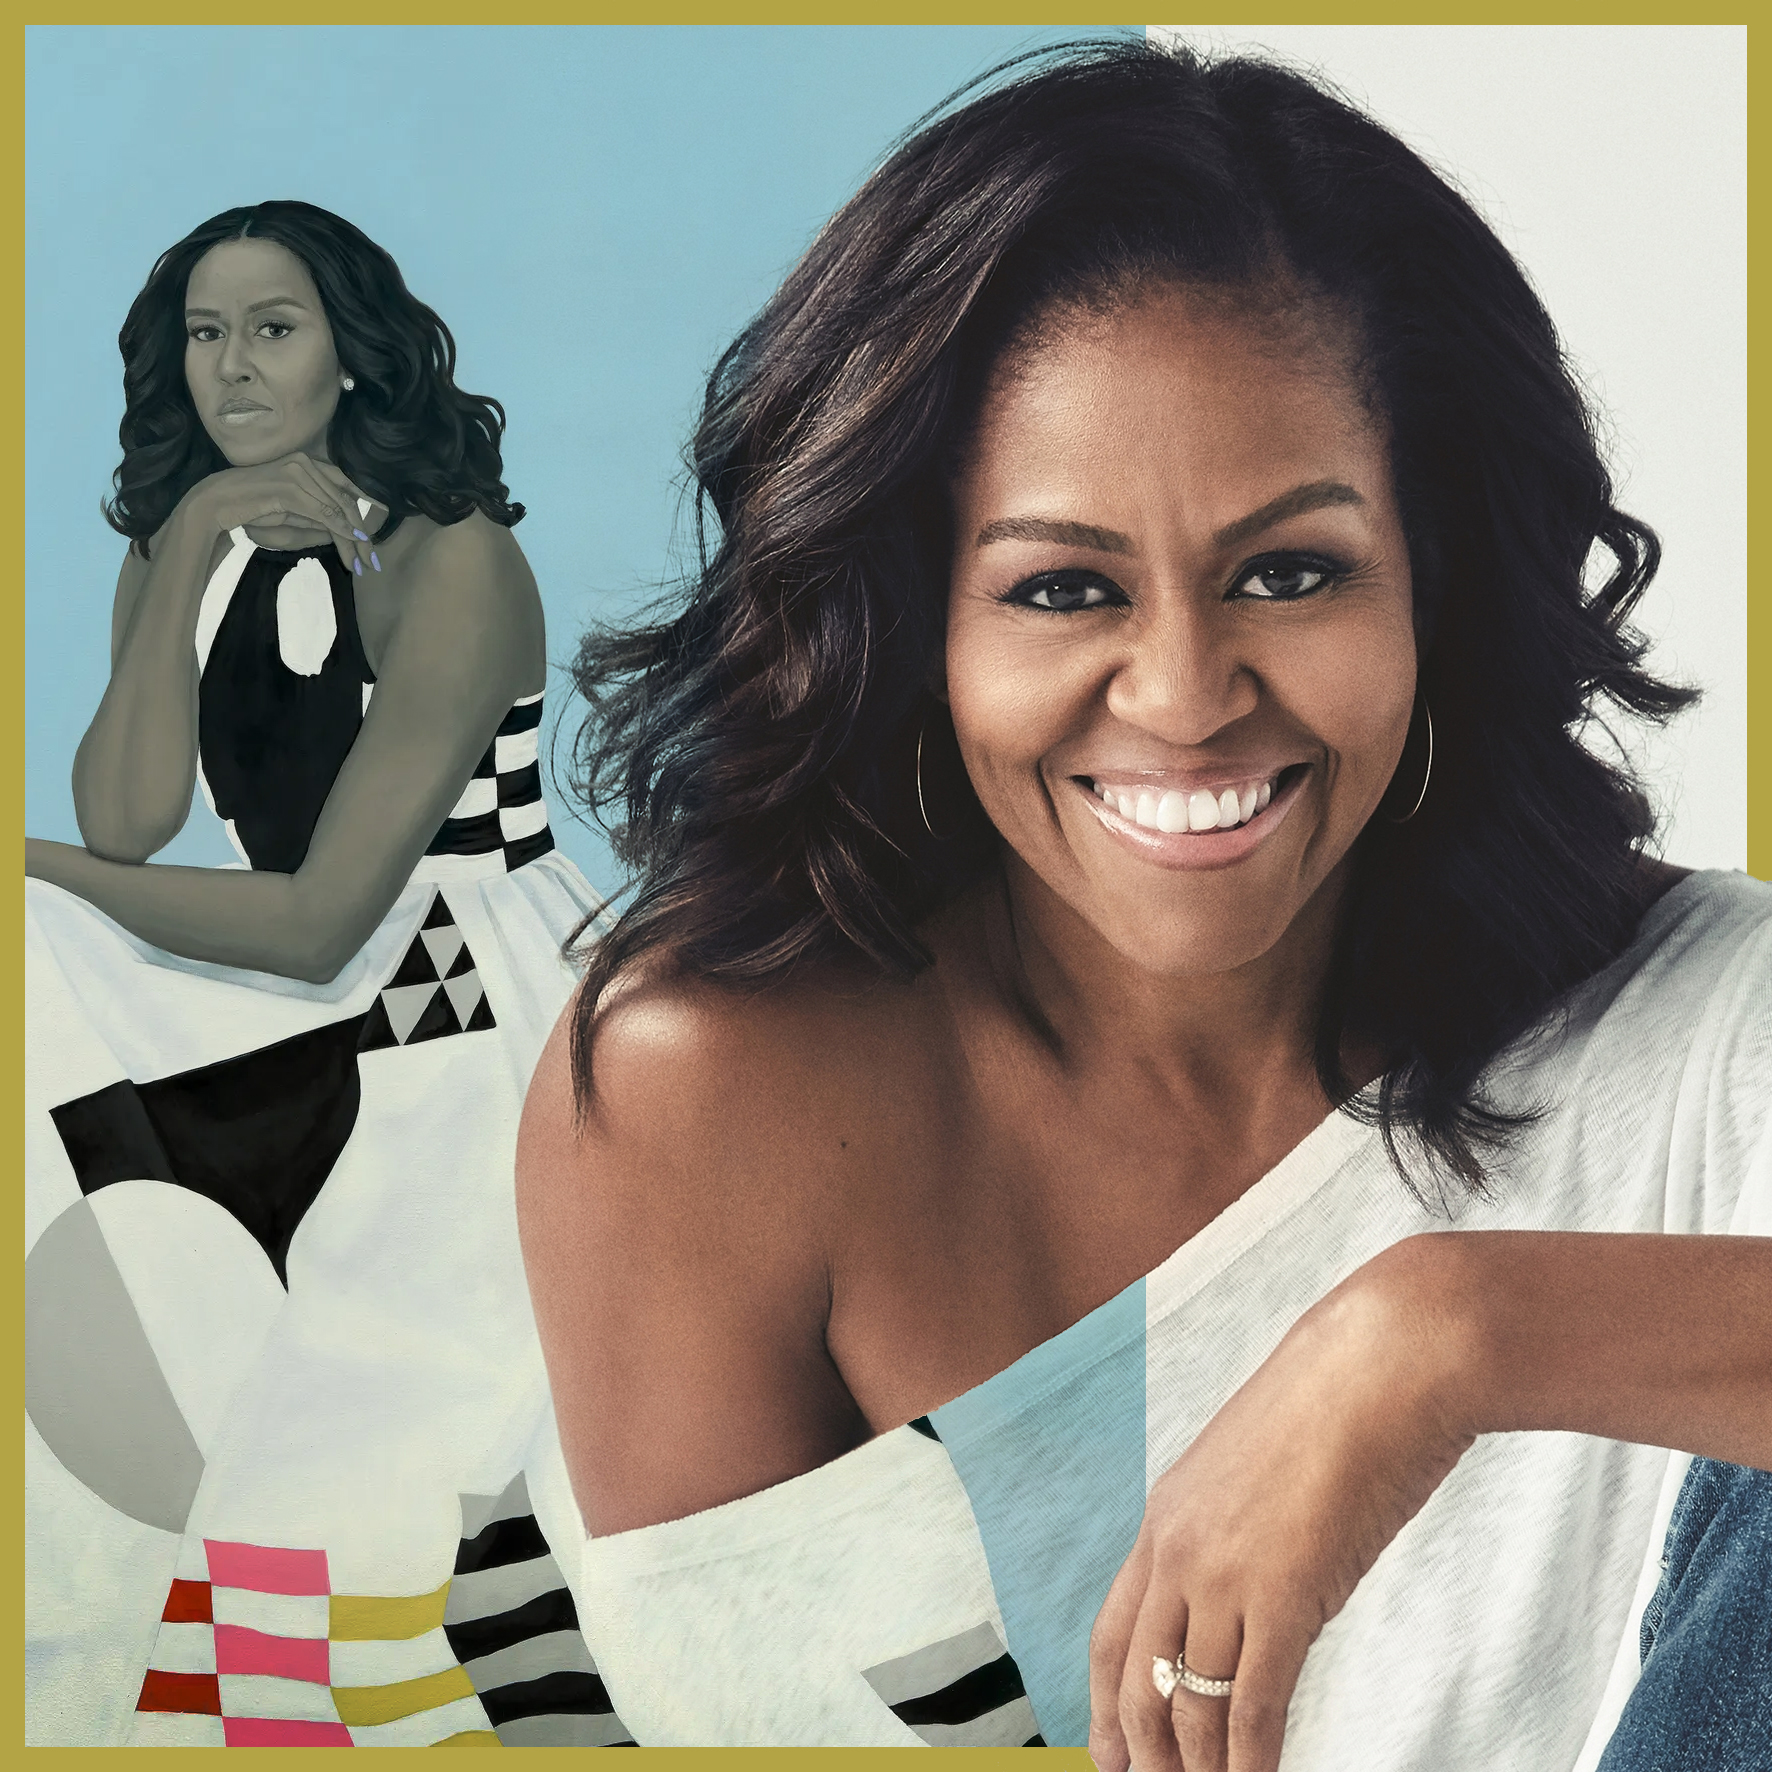 Michelle Obama: Η μόνη αληθινή Πρώτη Κυρία των ΗΠΑ που έγινε ποπ είδωλο